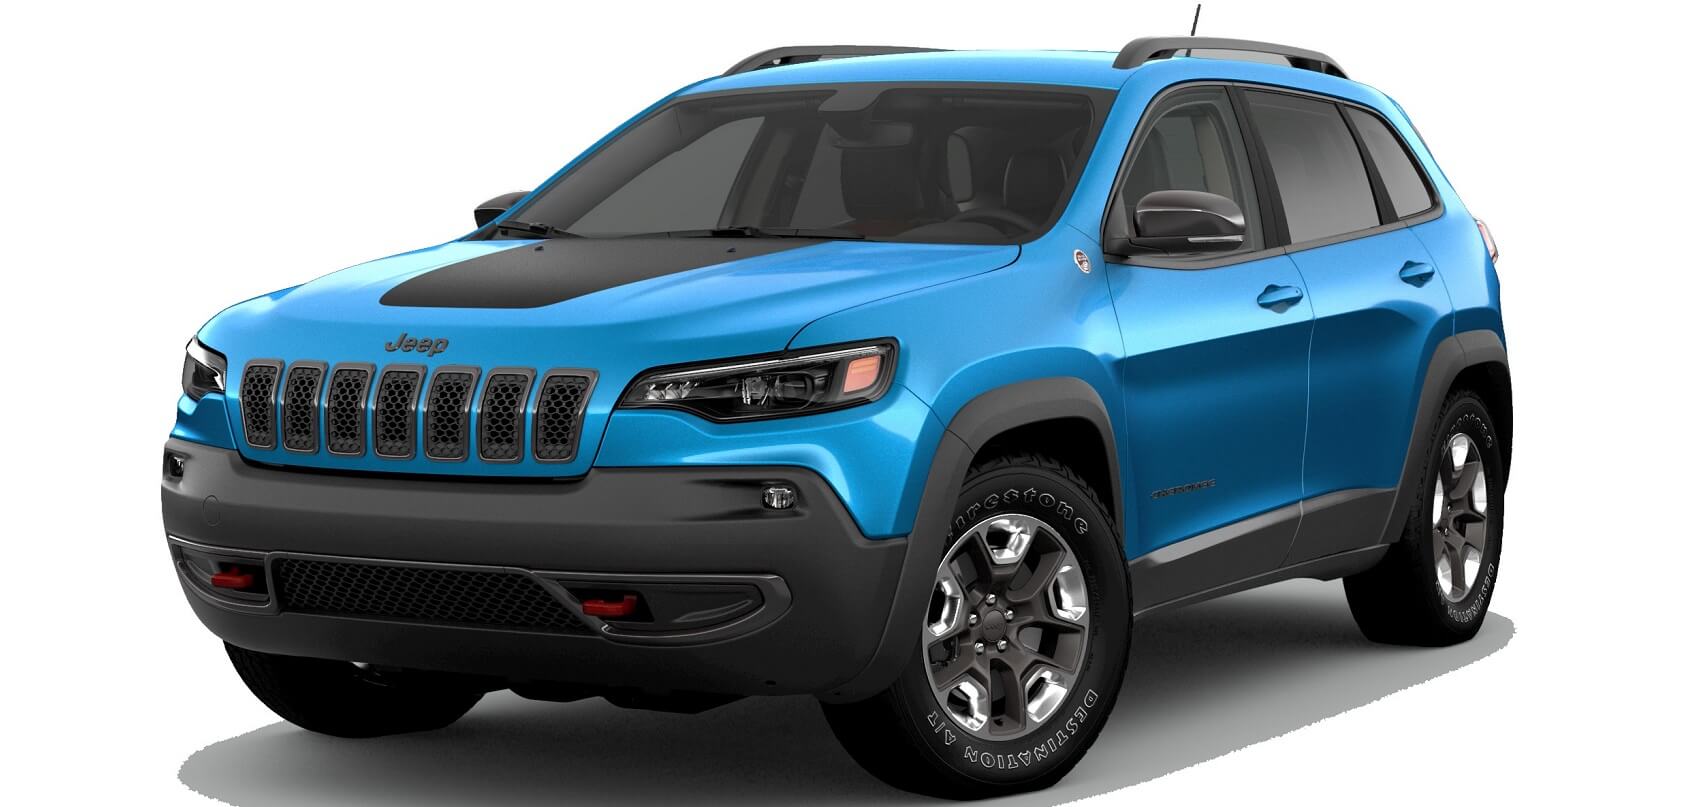 2021 Jeep Cherokee Trim Levels